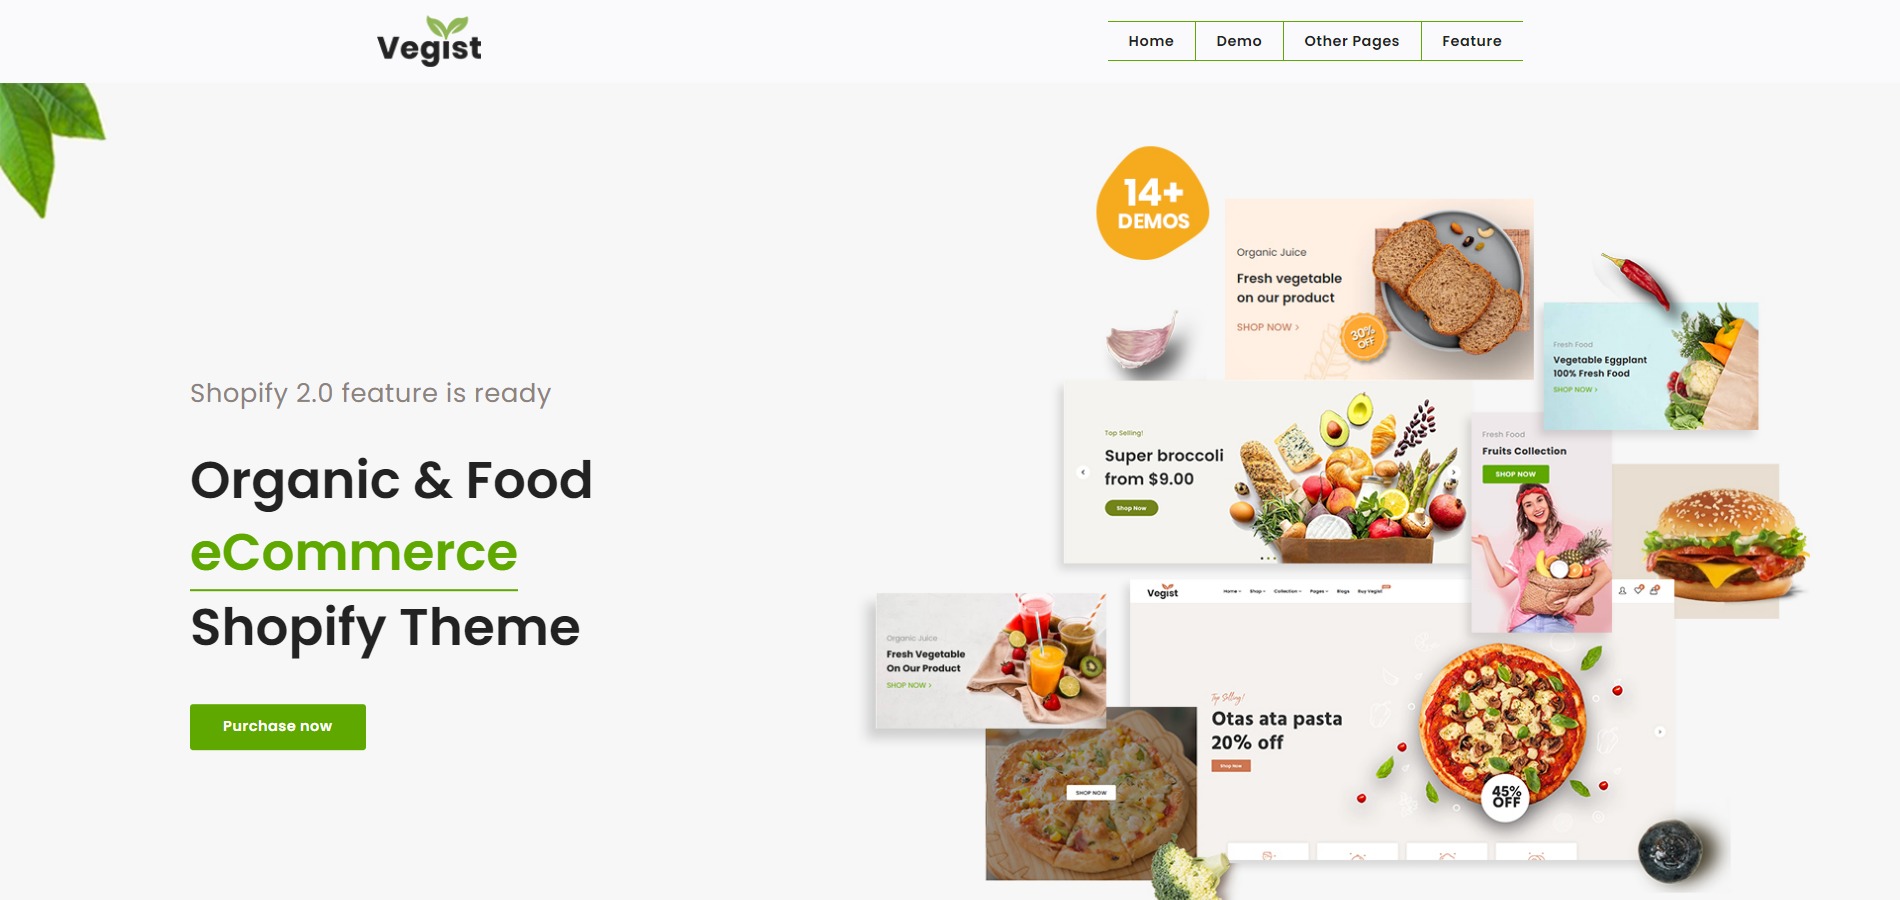 Vegist-The-Vegetables-Supermarket-Organic-Food-eCommerce-Shopify